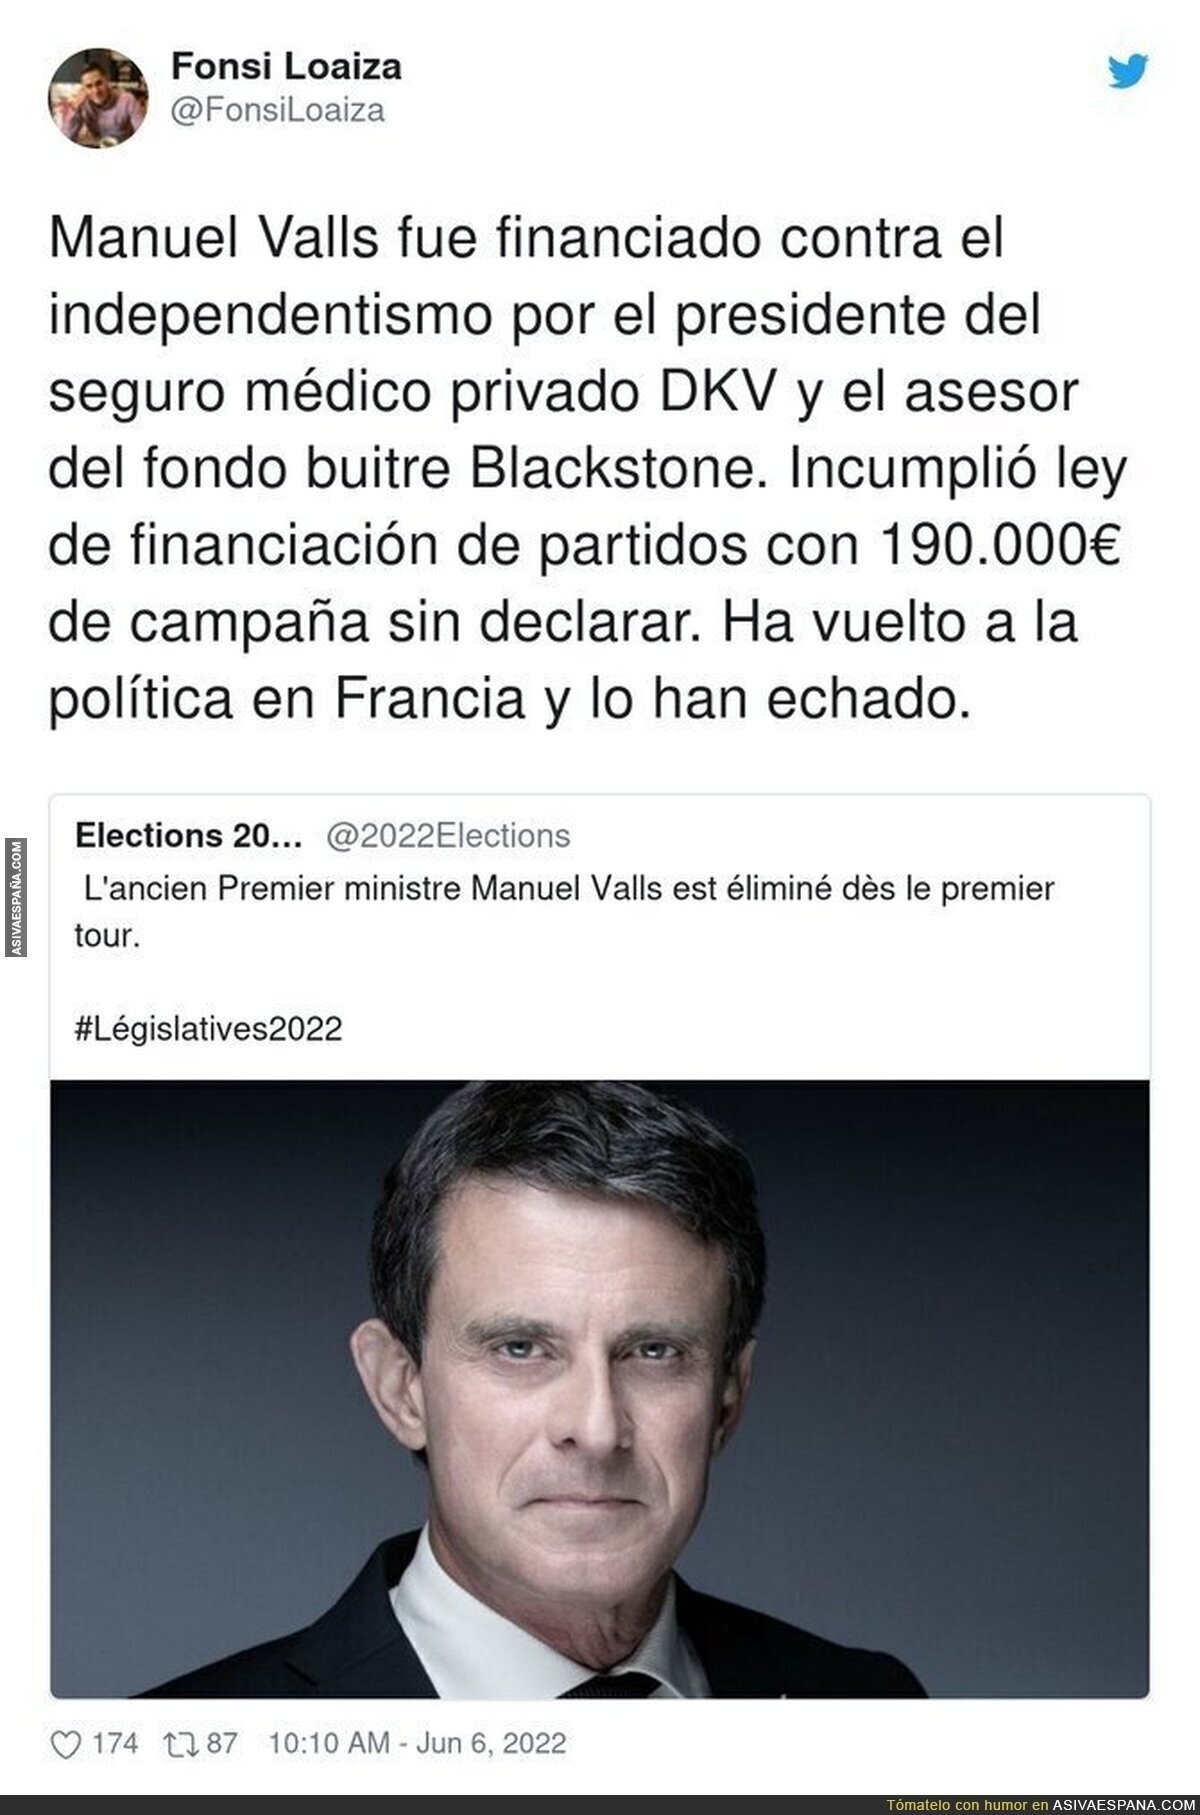 Manuel Valls no levanta cabeza en política